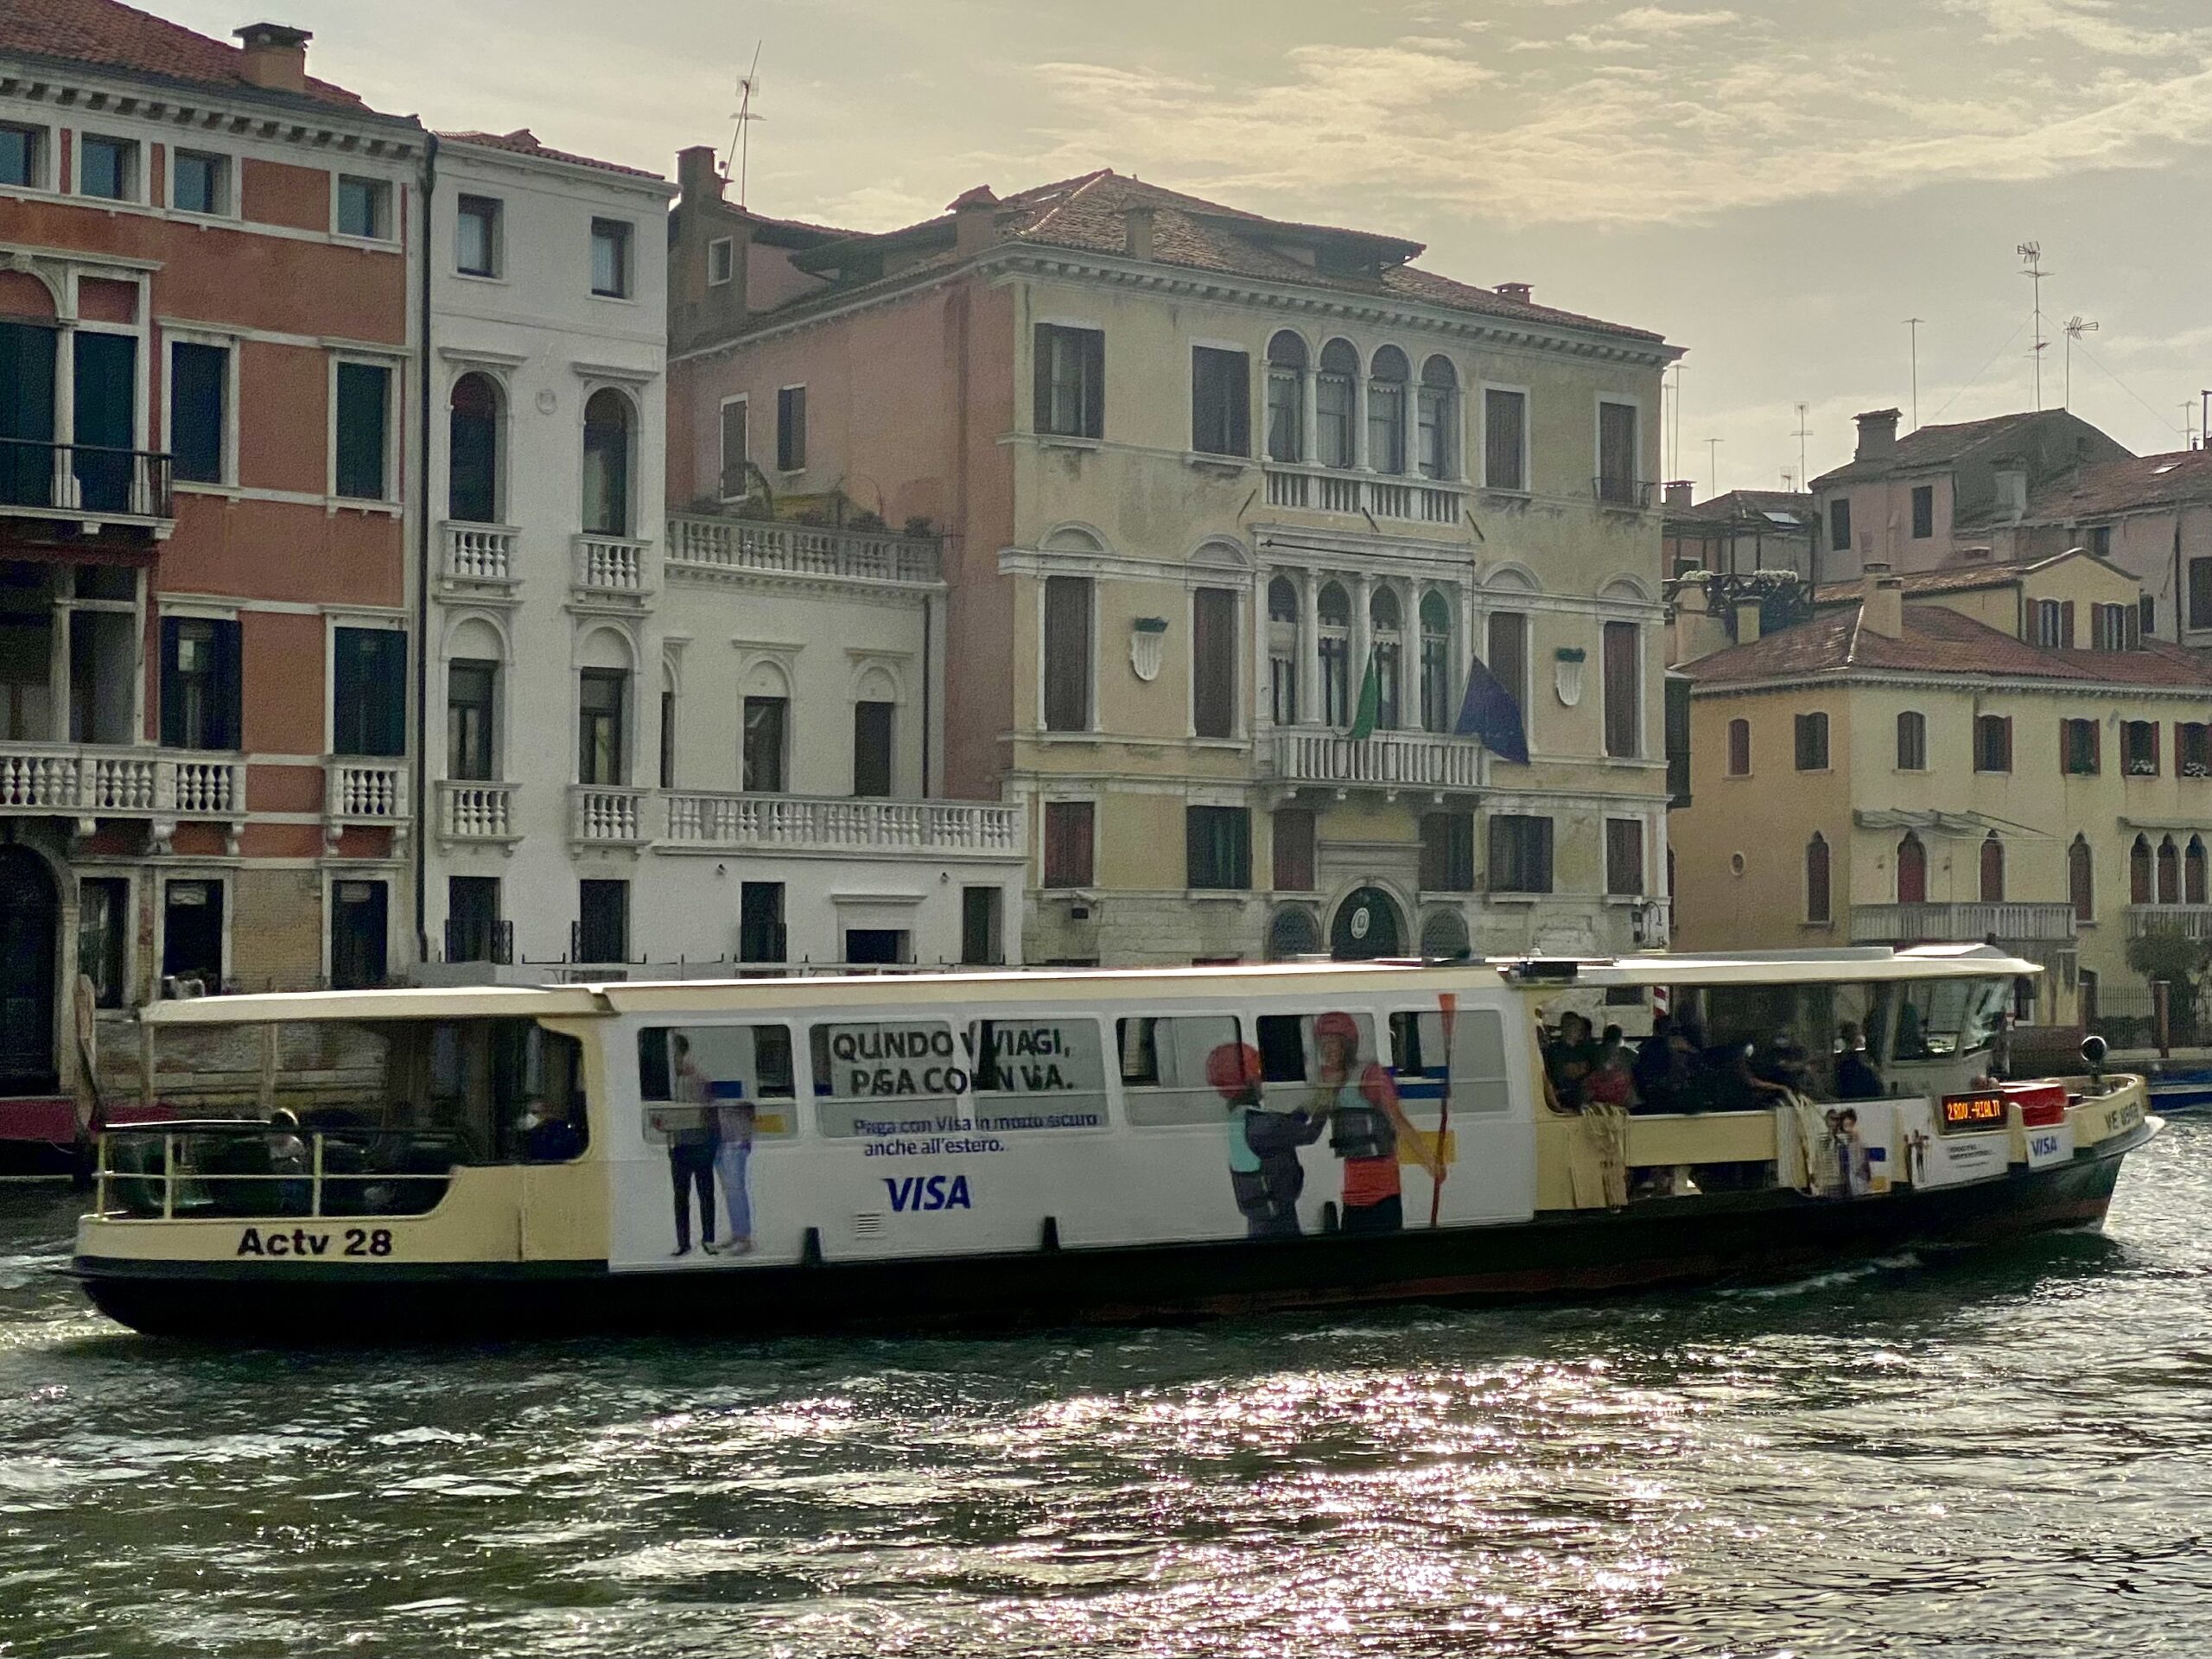 Trasporti più smart a Venezia grazie ai pagamenti contactless